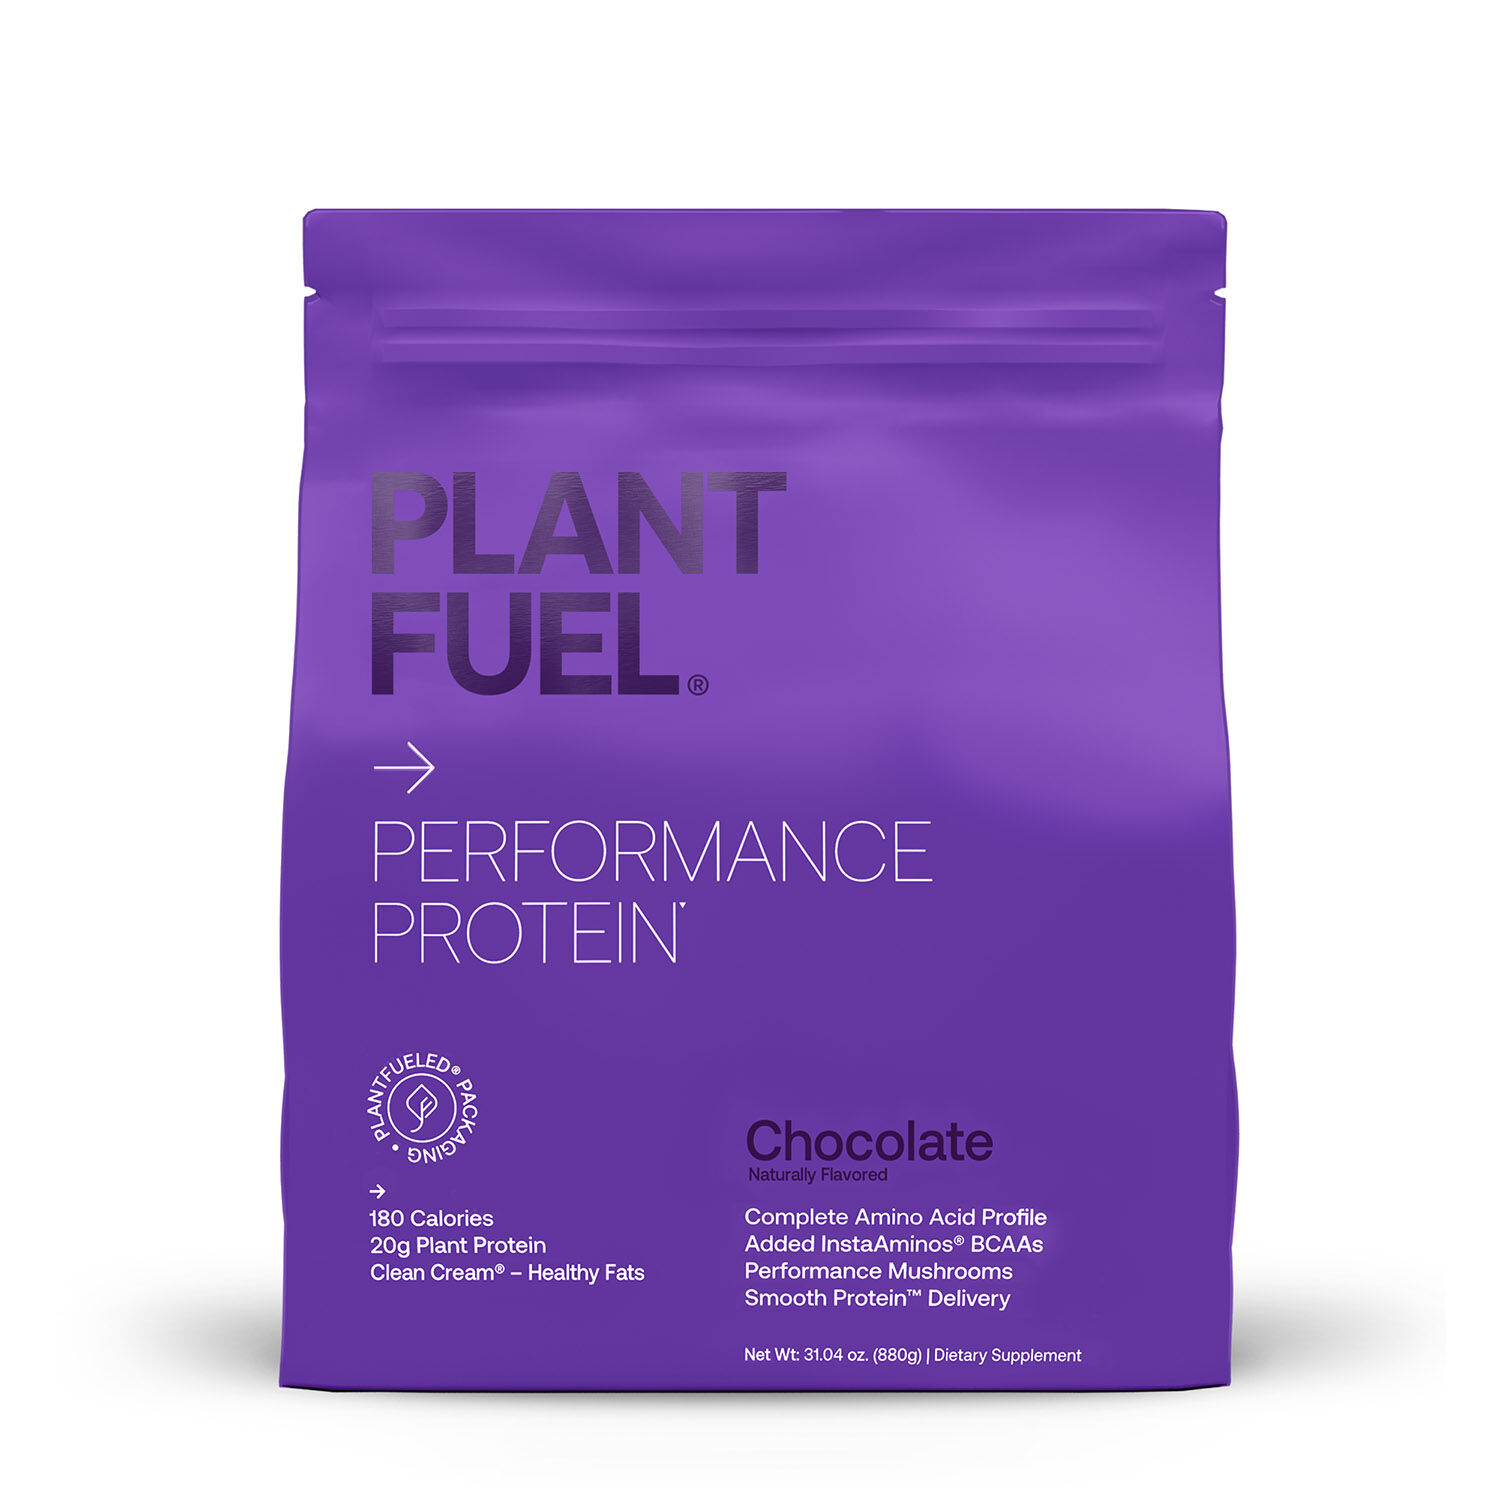 PlantFuel Performance Protein.